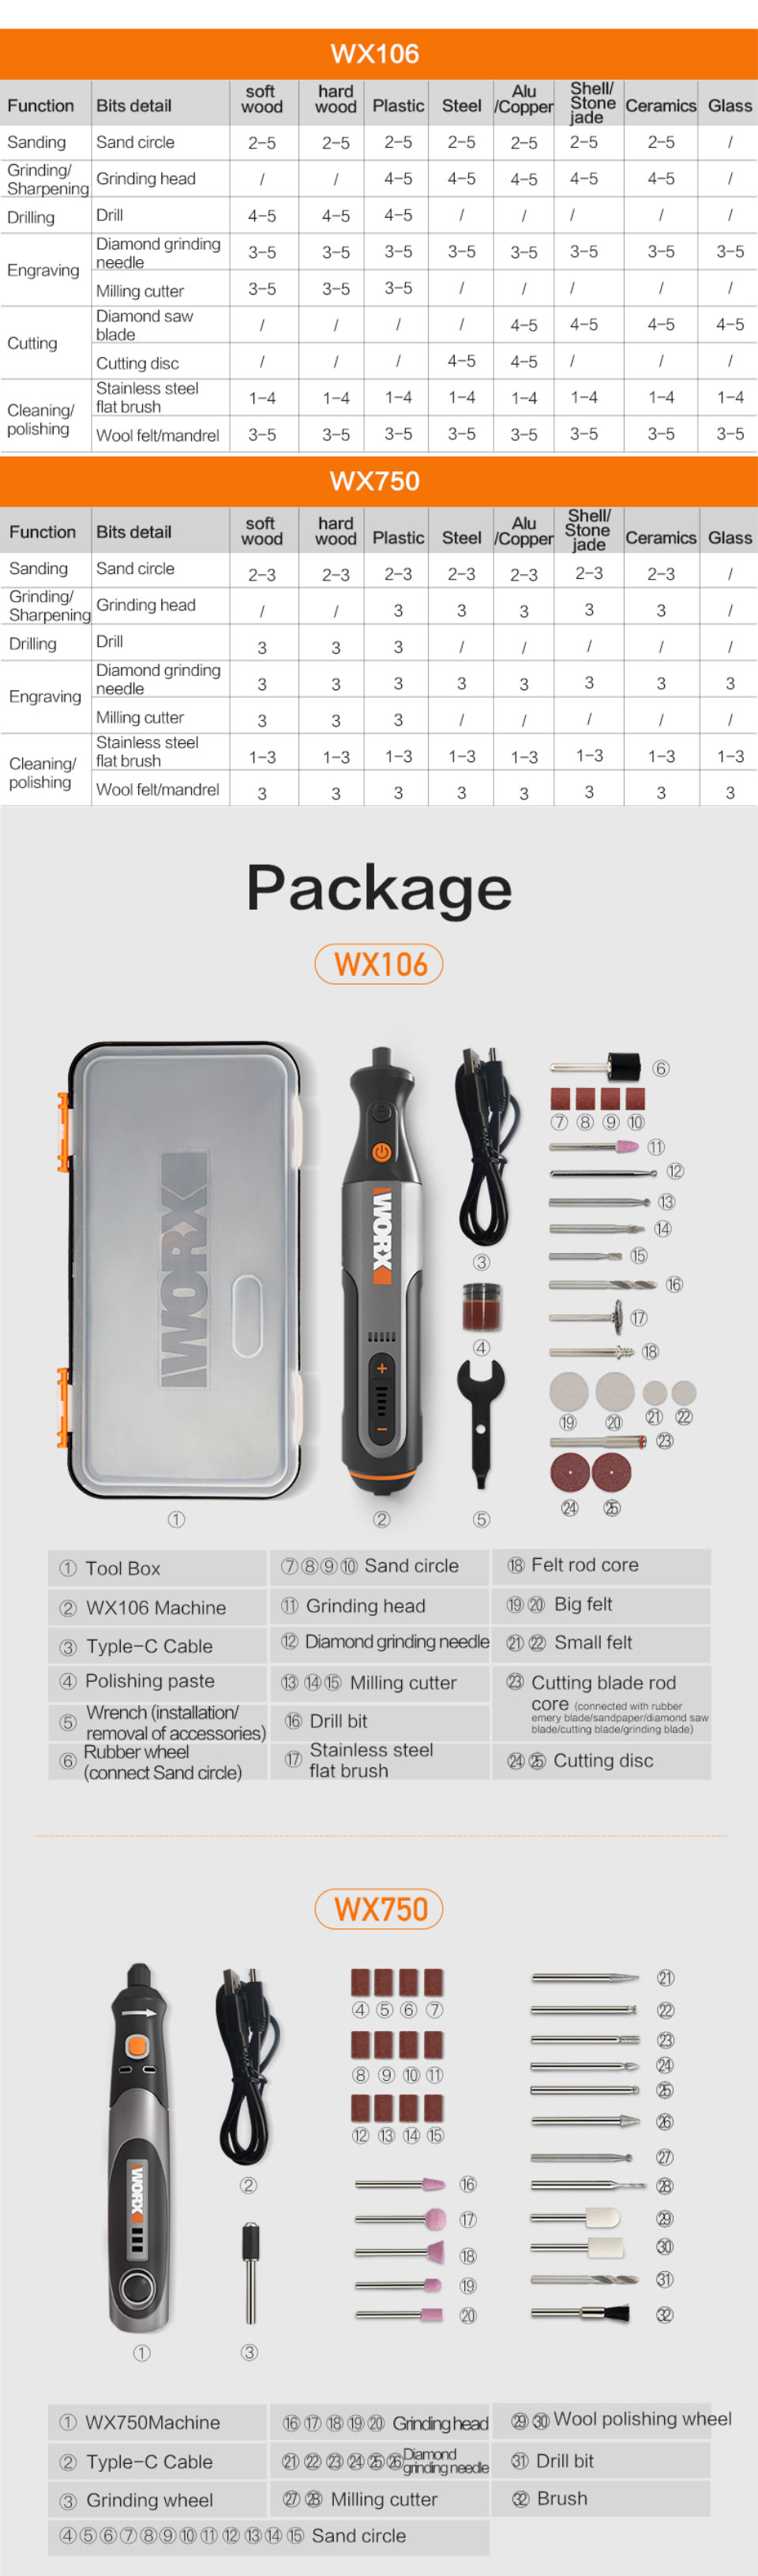 Worx-WX106-8V-Rotary-Tool-USB-Charger-Electric-Mini-Drill-WX750-4V-Engraving-Grinding-Polishing-Mach-1828737-14